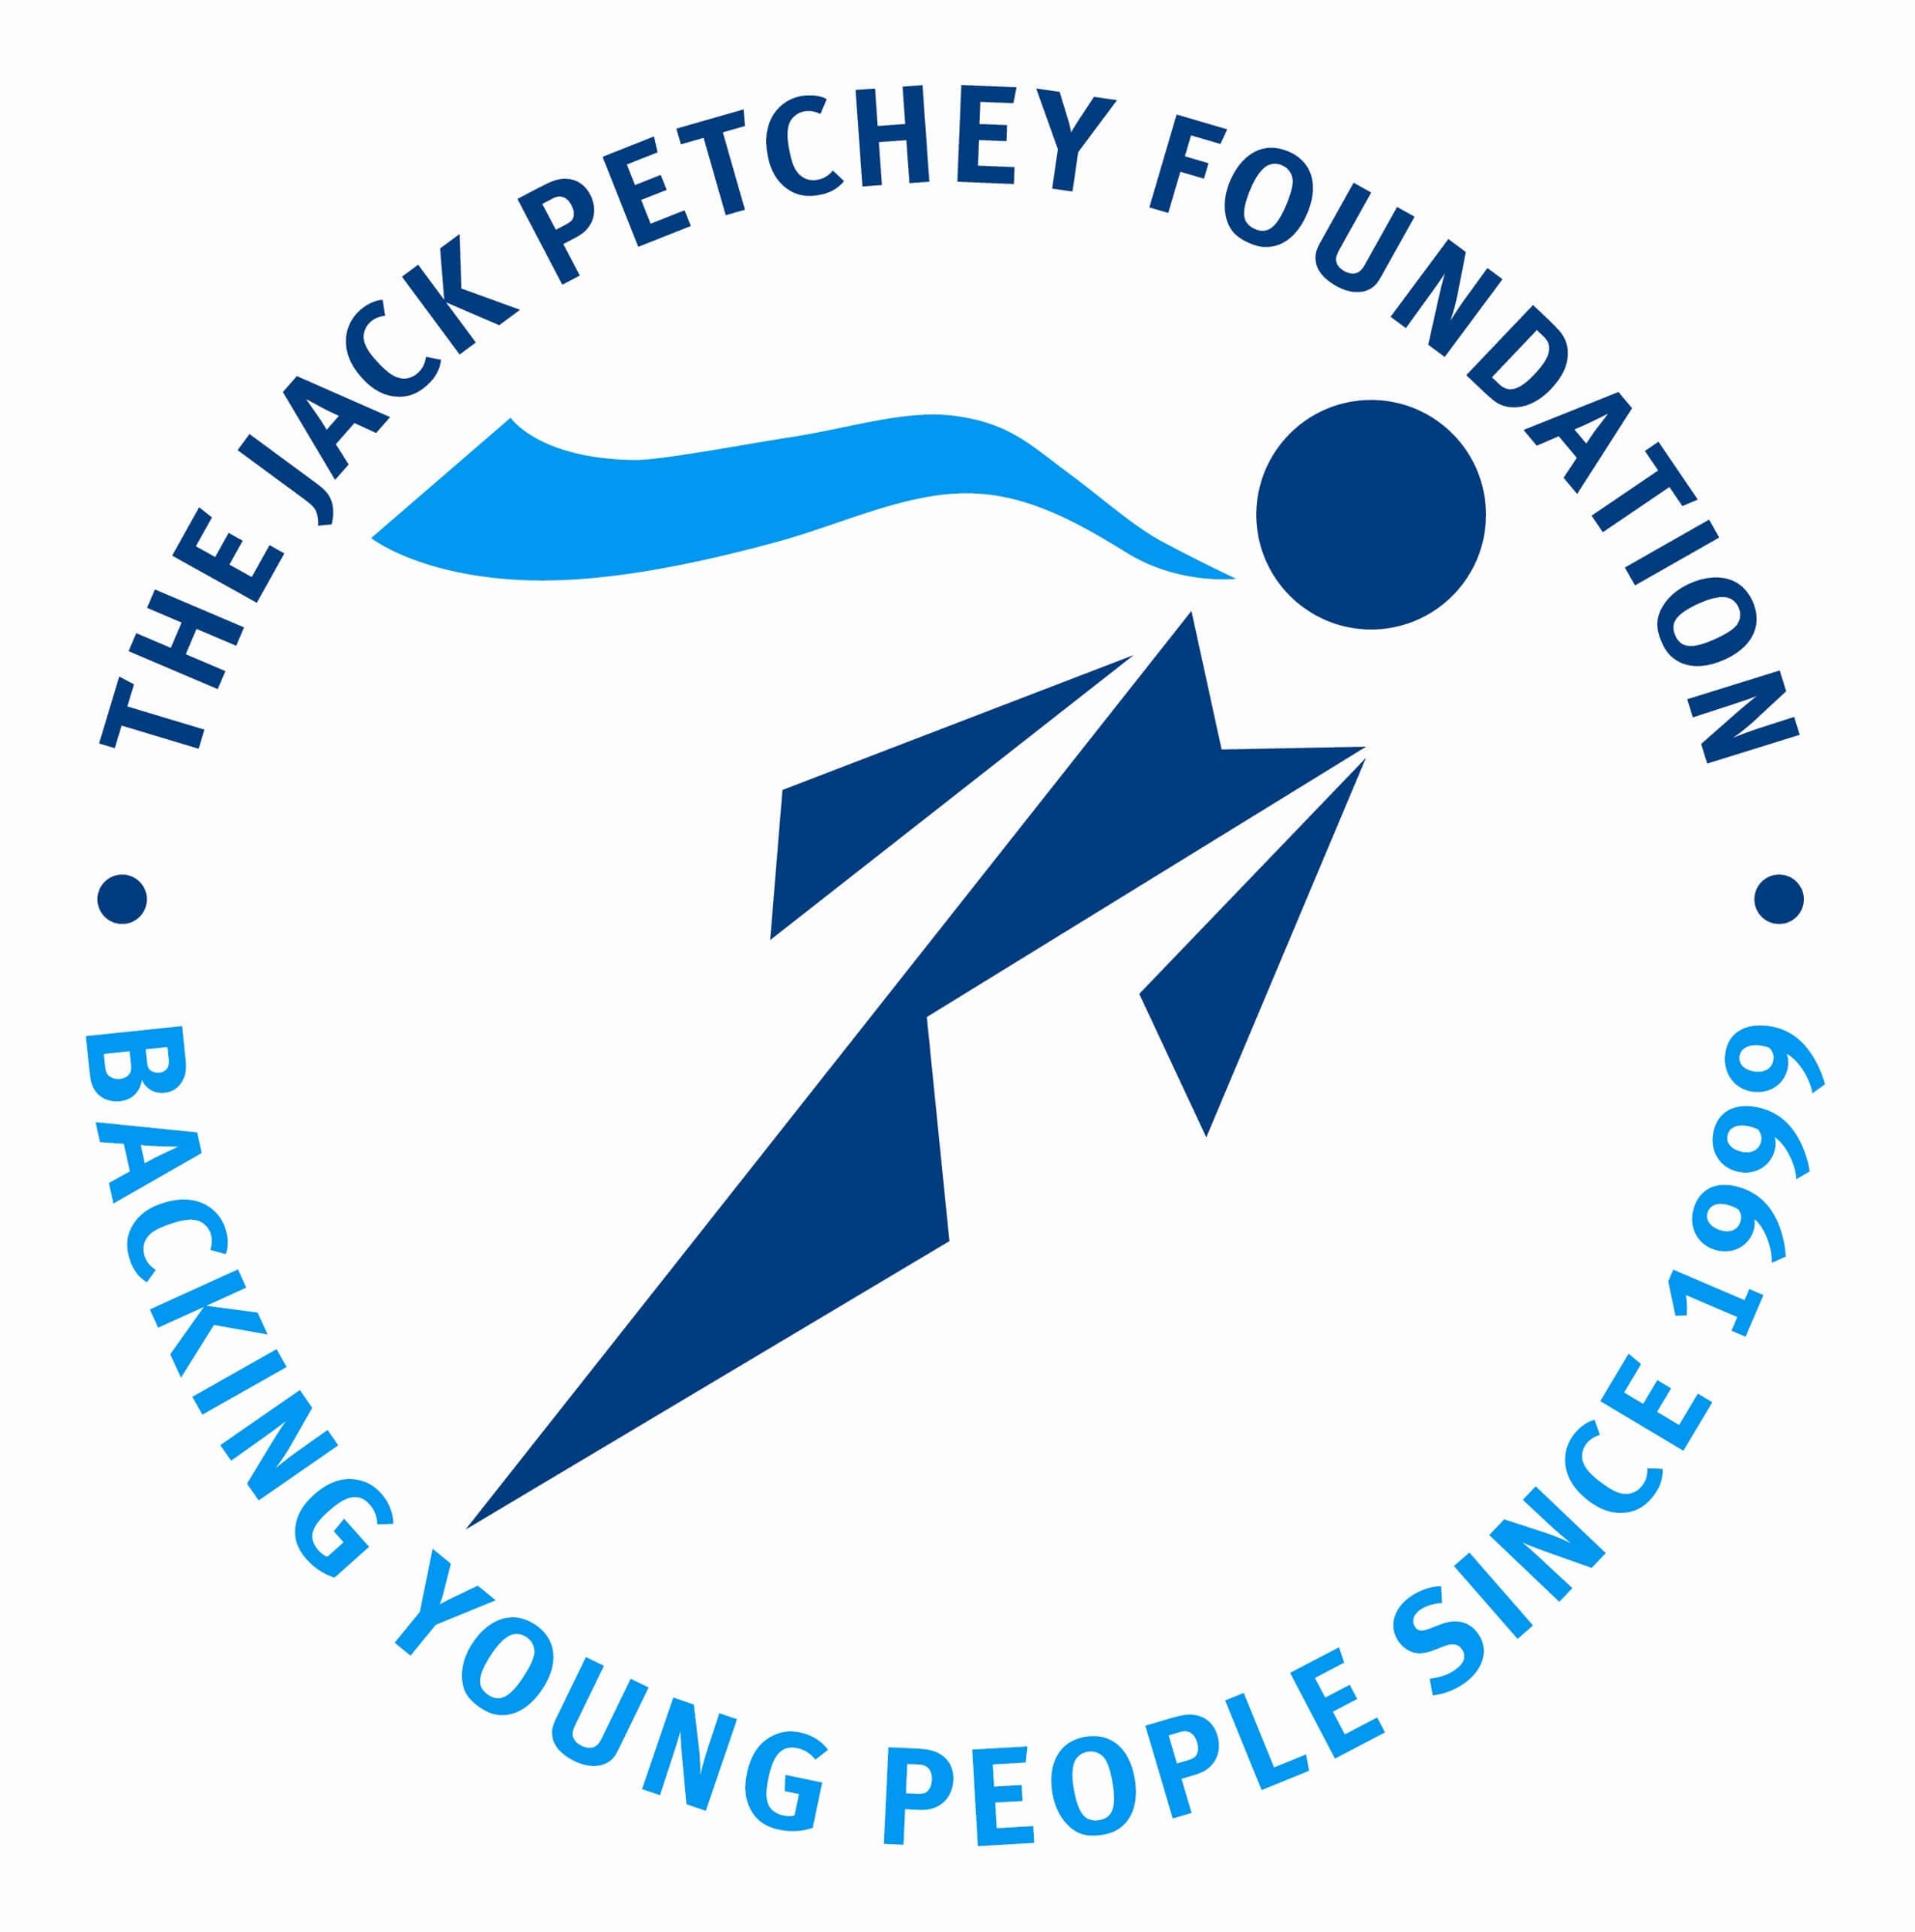 Jack Petchey logo